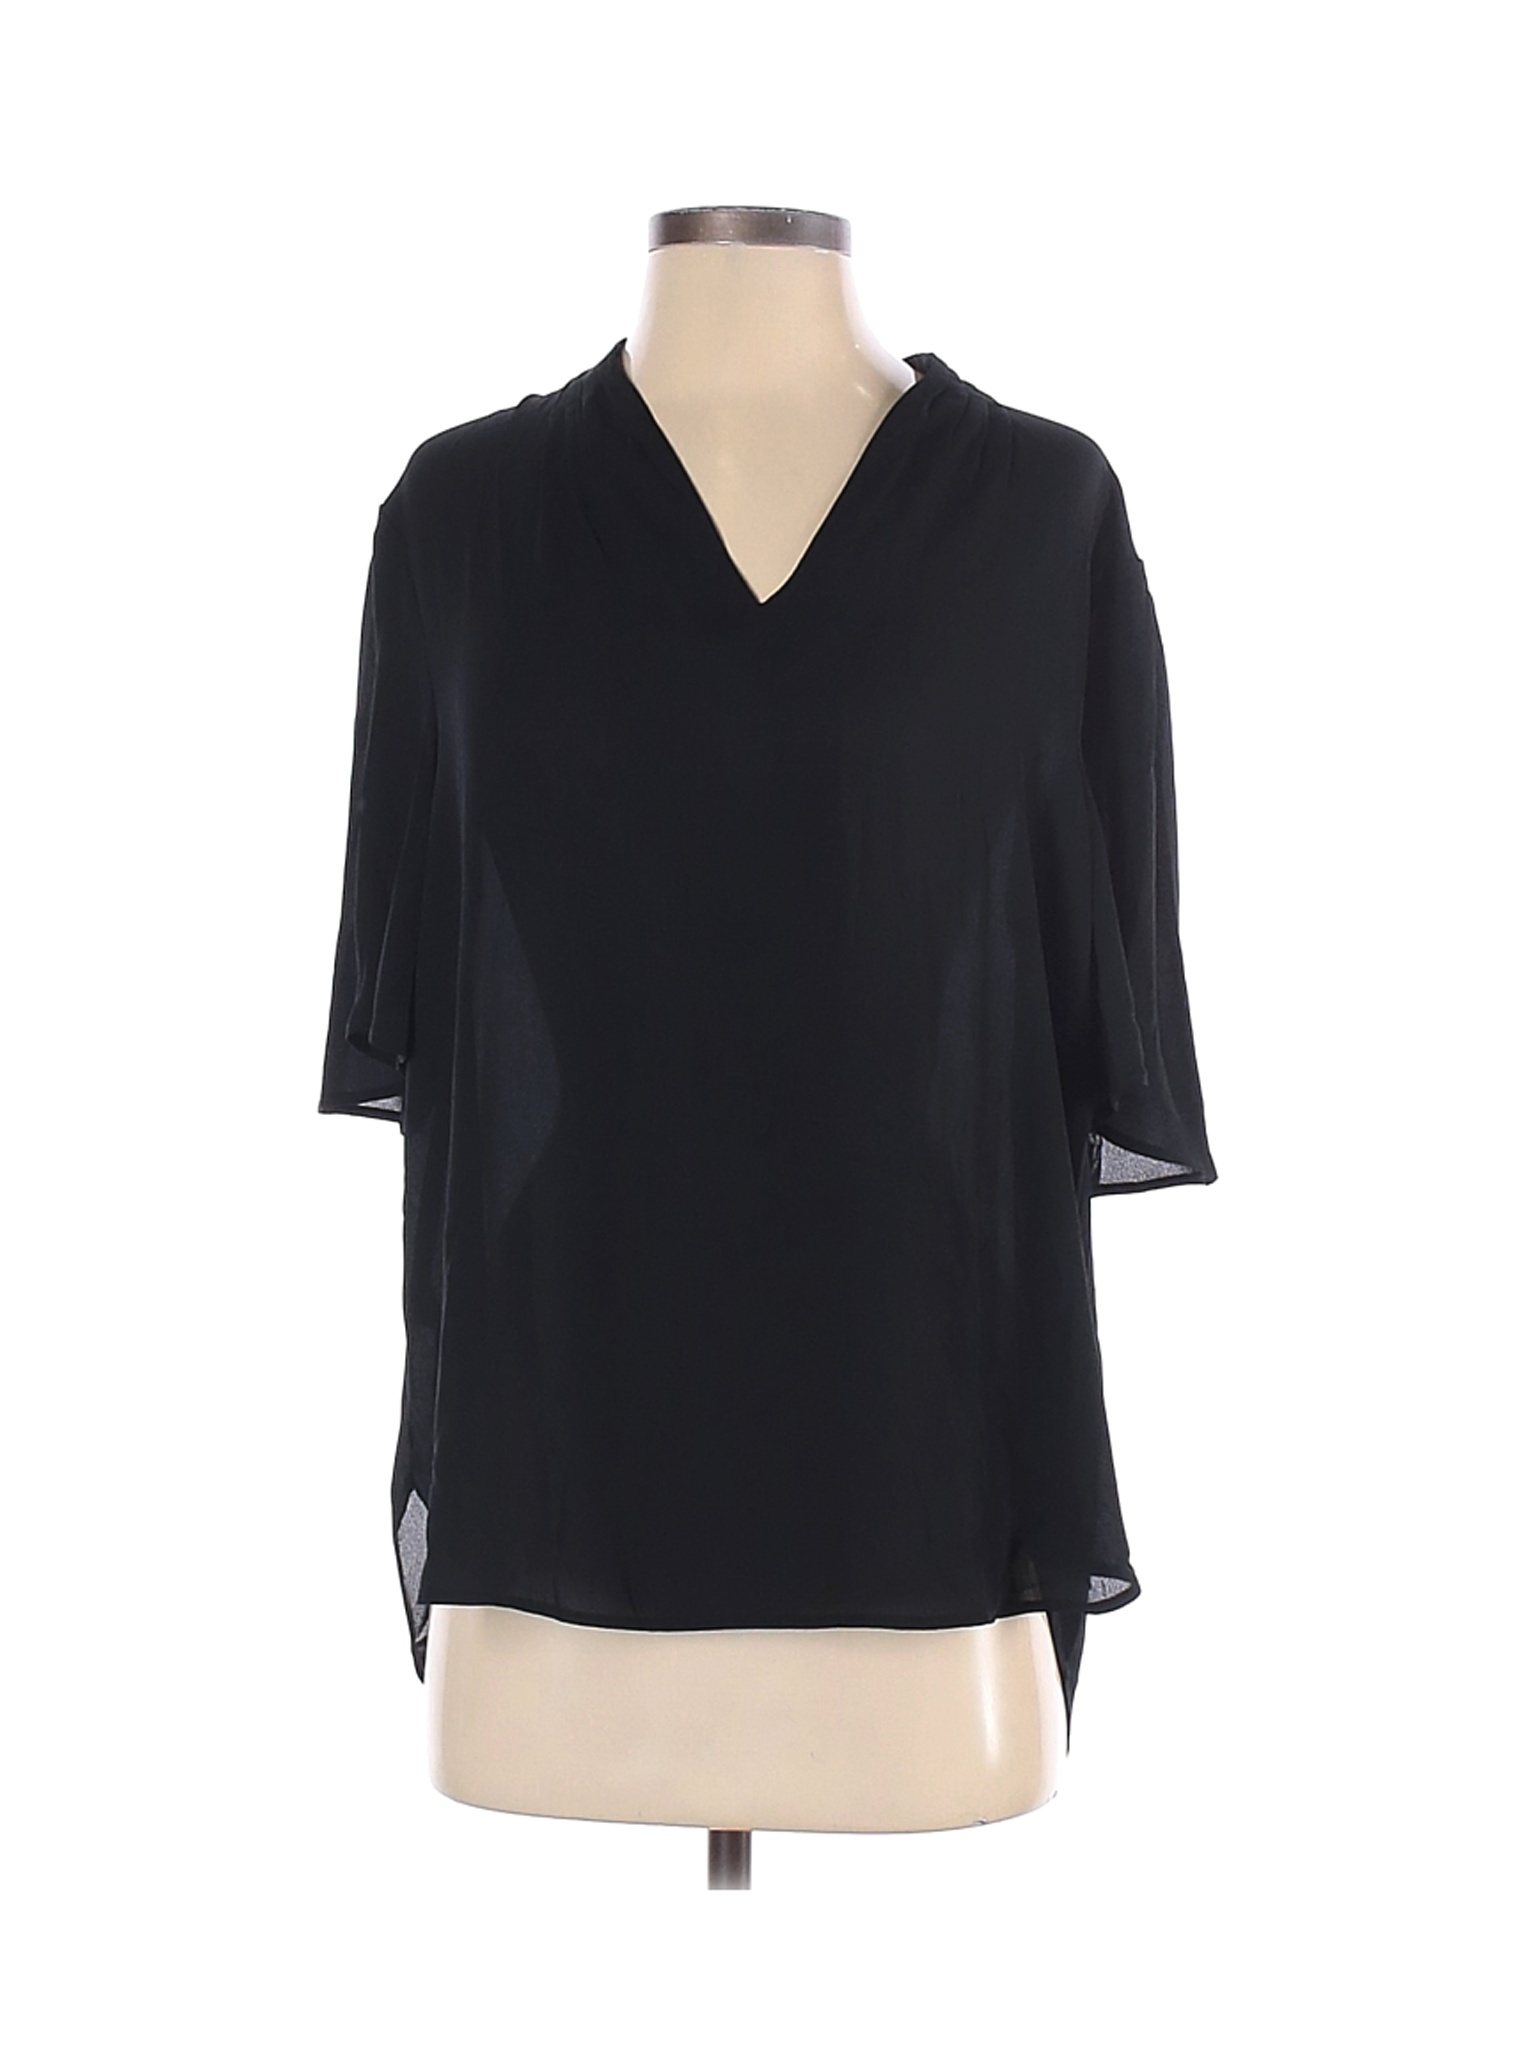 Ann Taylor Factory Women Black Short Sleeve Blouse M | eBay